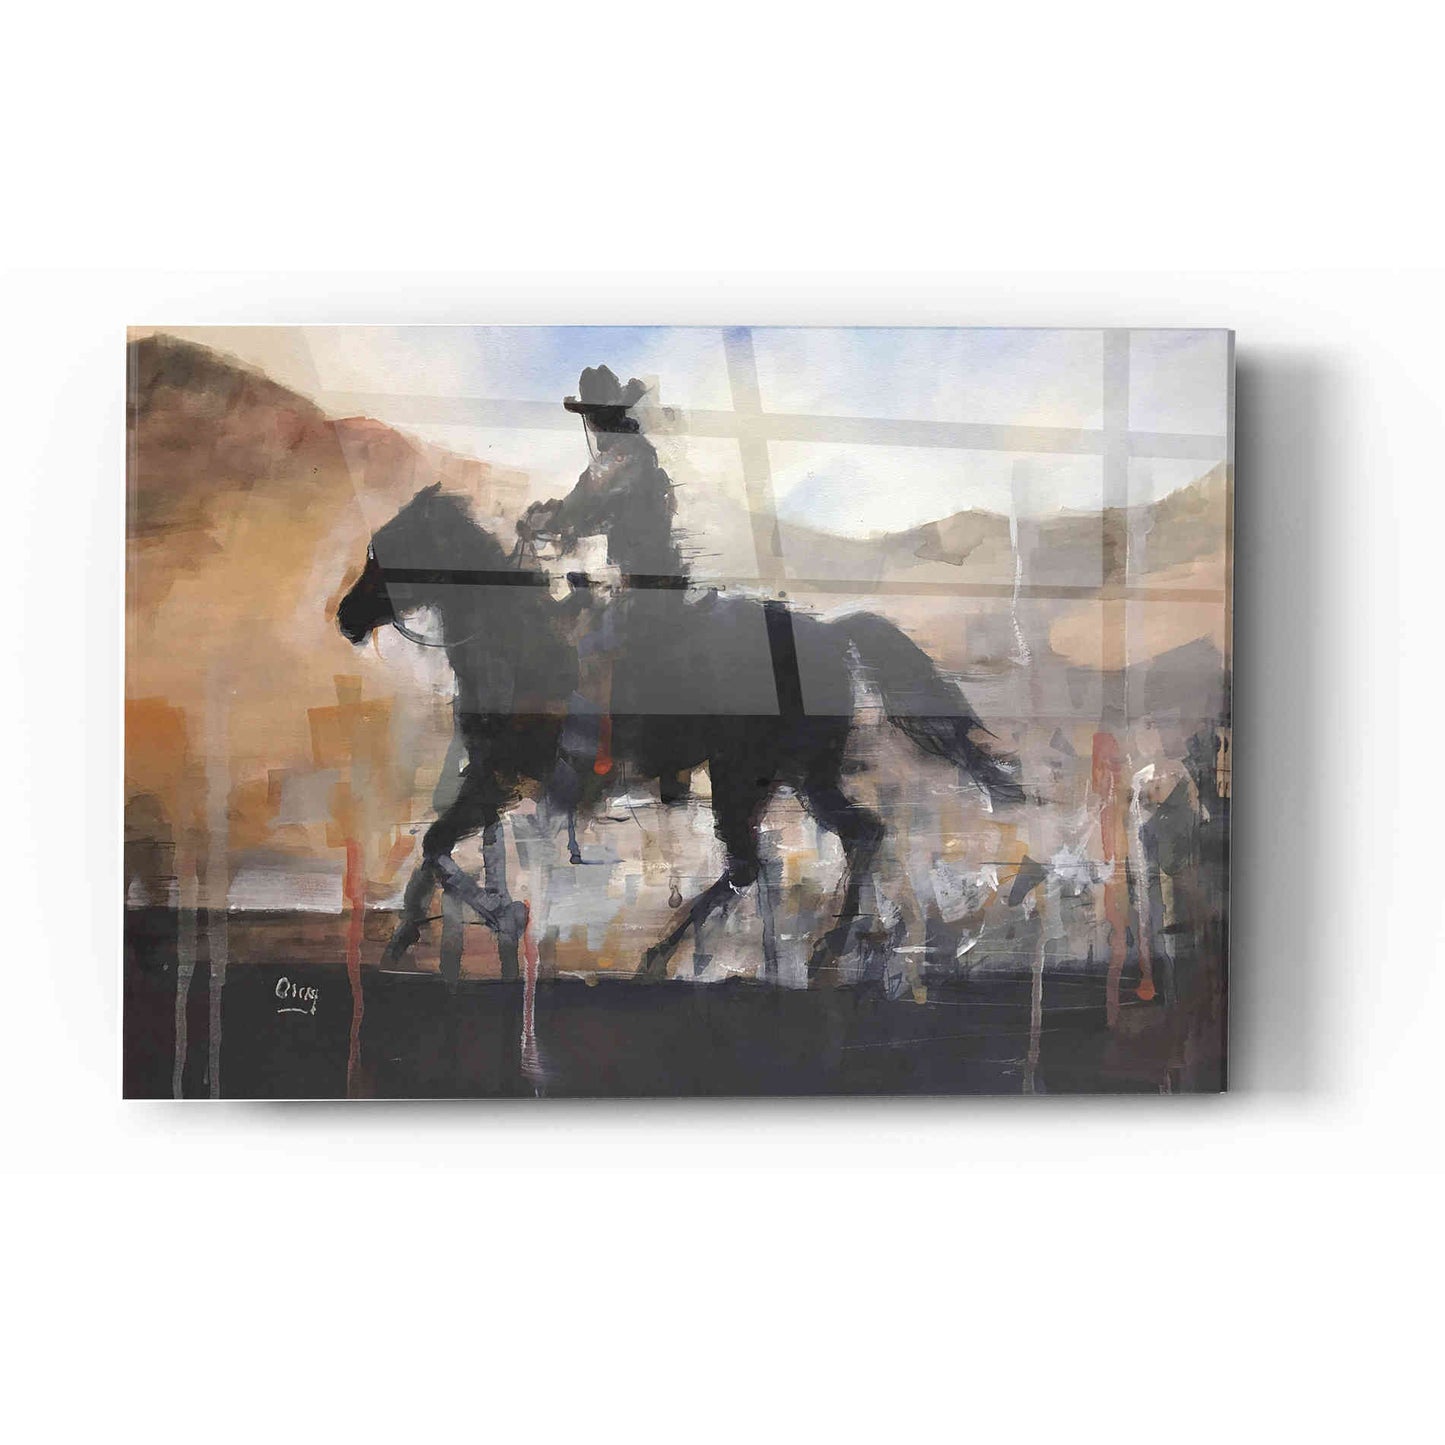 Epic Art 'The Chase' by Oscar Alvarez Pardo, Acrylic Glass Wall Art,12x16